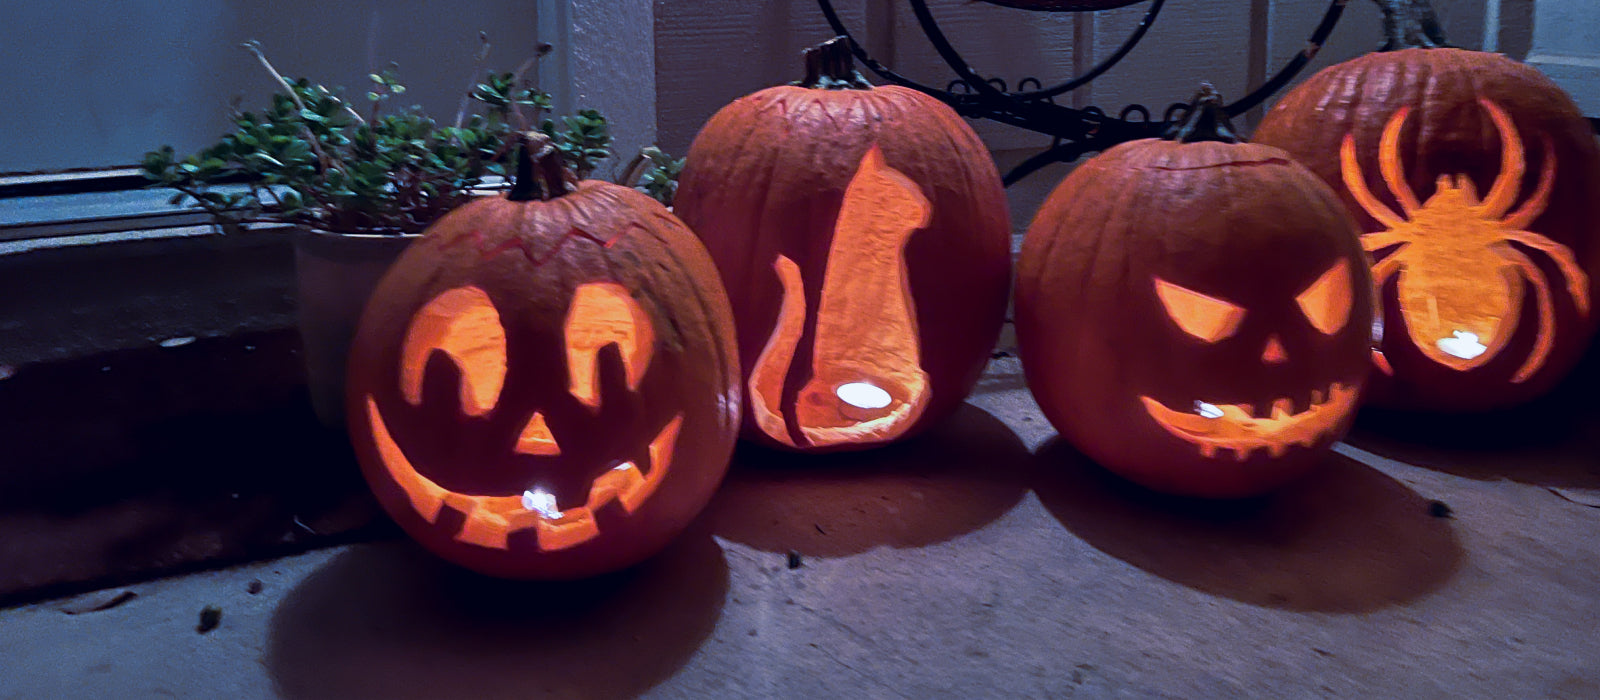 Carved pumpkins created using Wondercide Halloween pumpkin carving templates